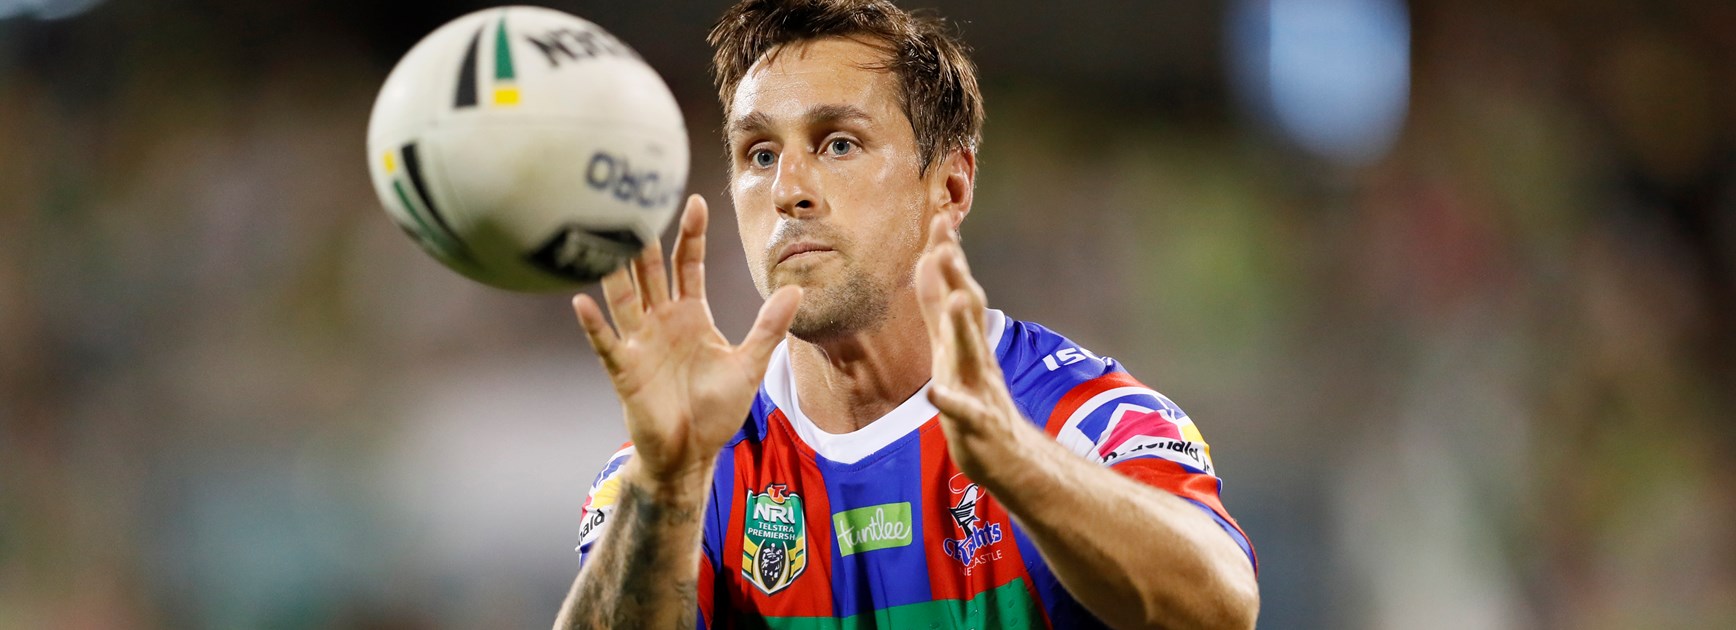 Pearce-Cronk showdown to kick-start new NRL rivalry